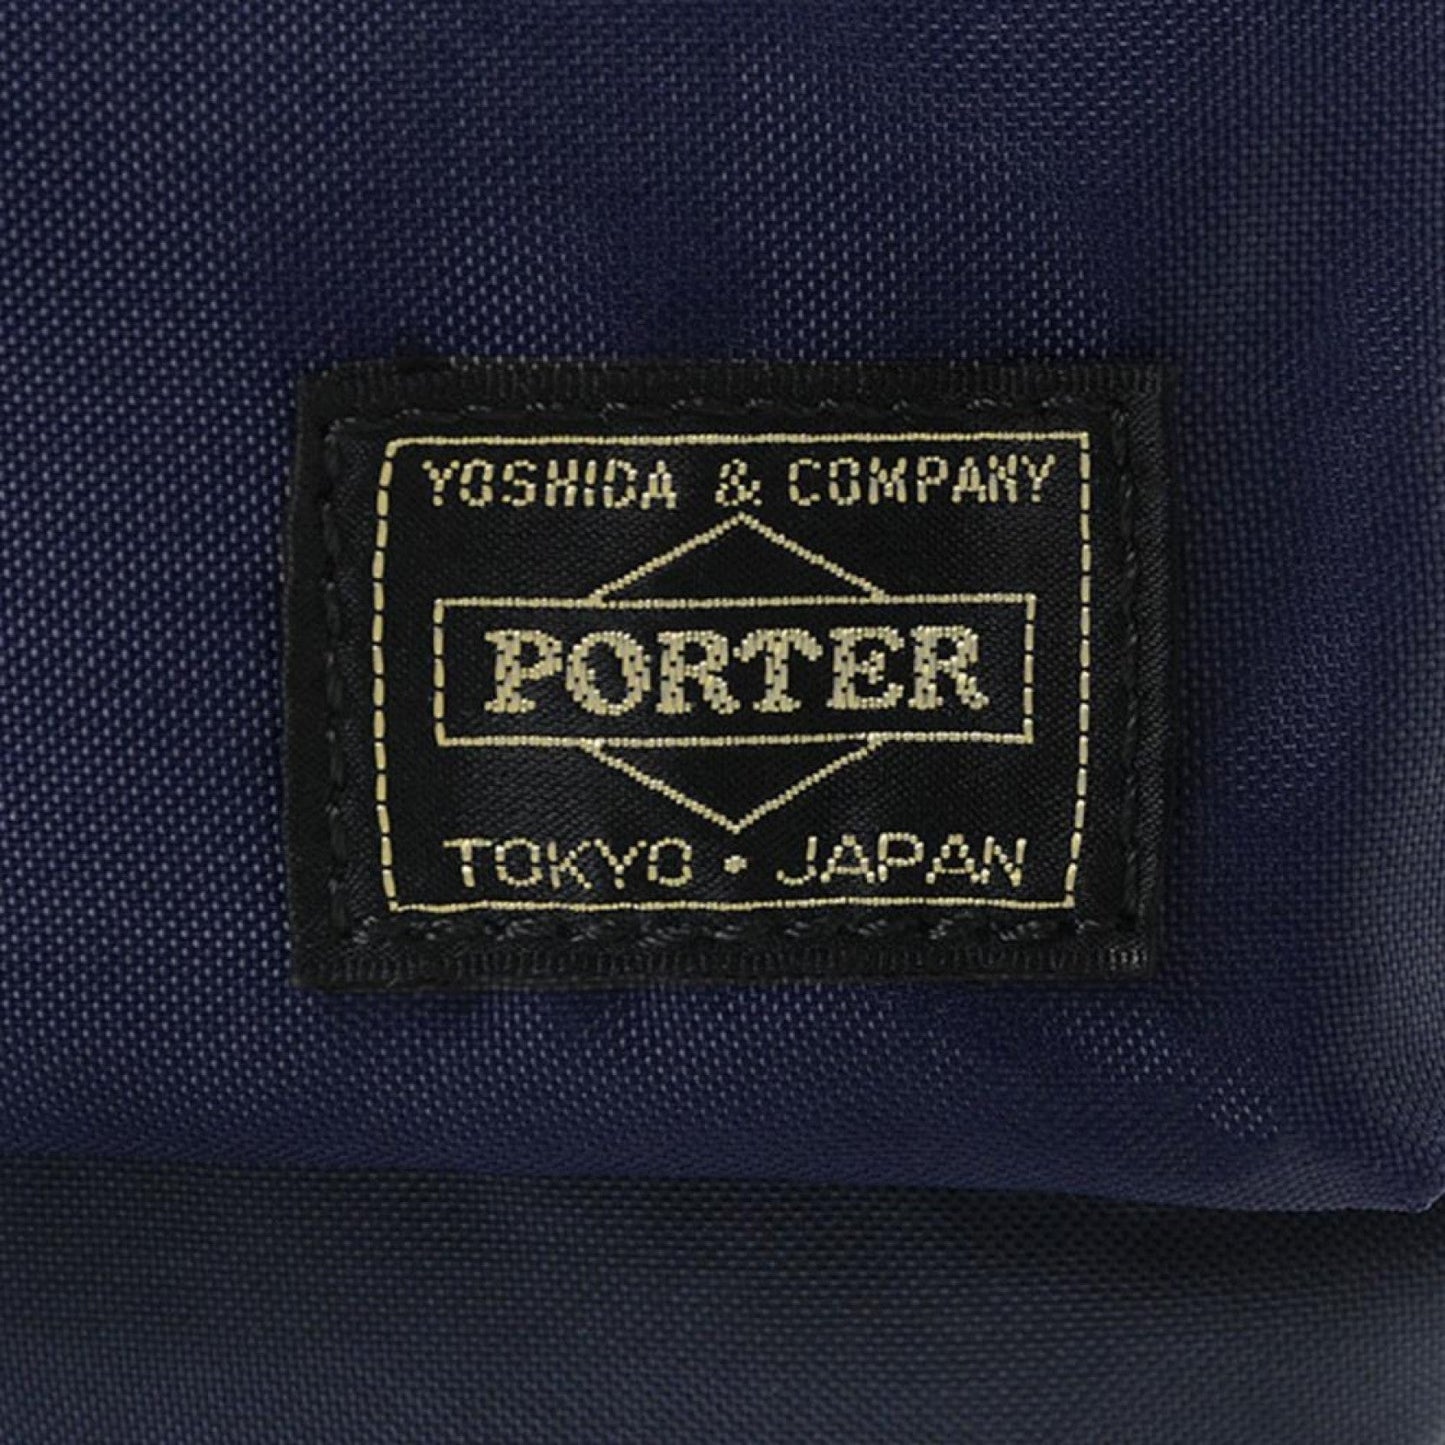 Porter by Yoshida Porter by Yoshida Force Series Shoulder Pouch (Navy) 855-05461-50